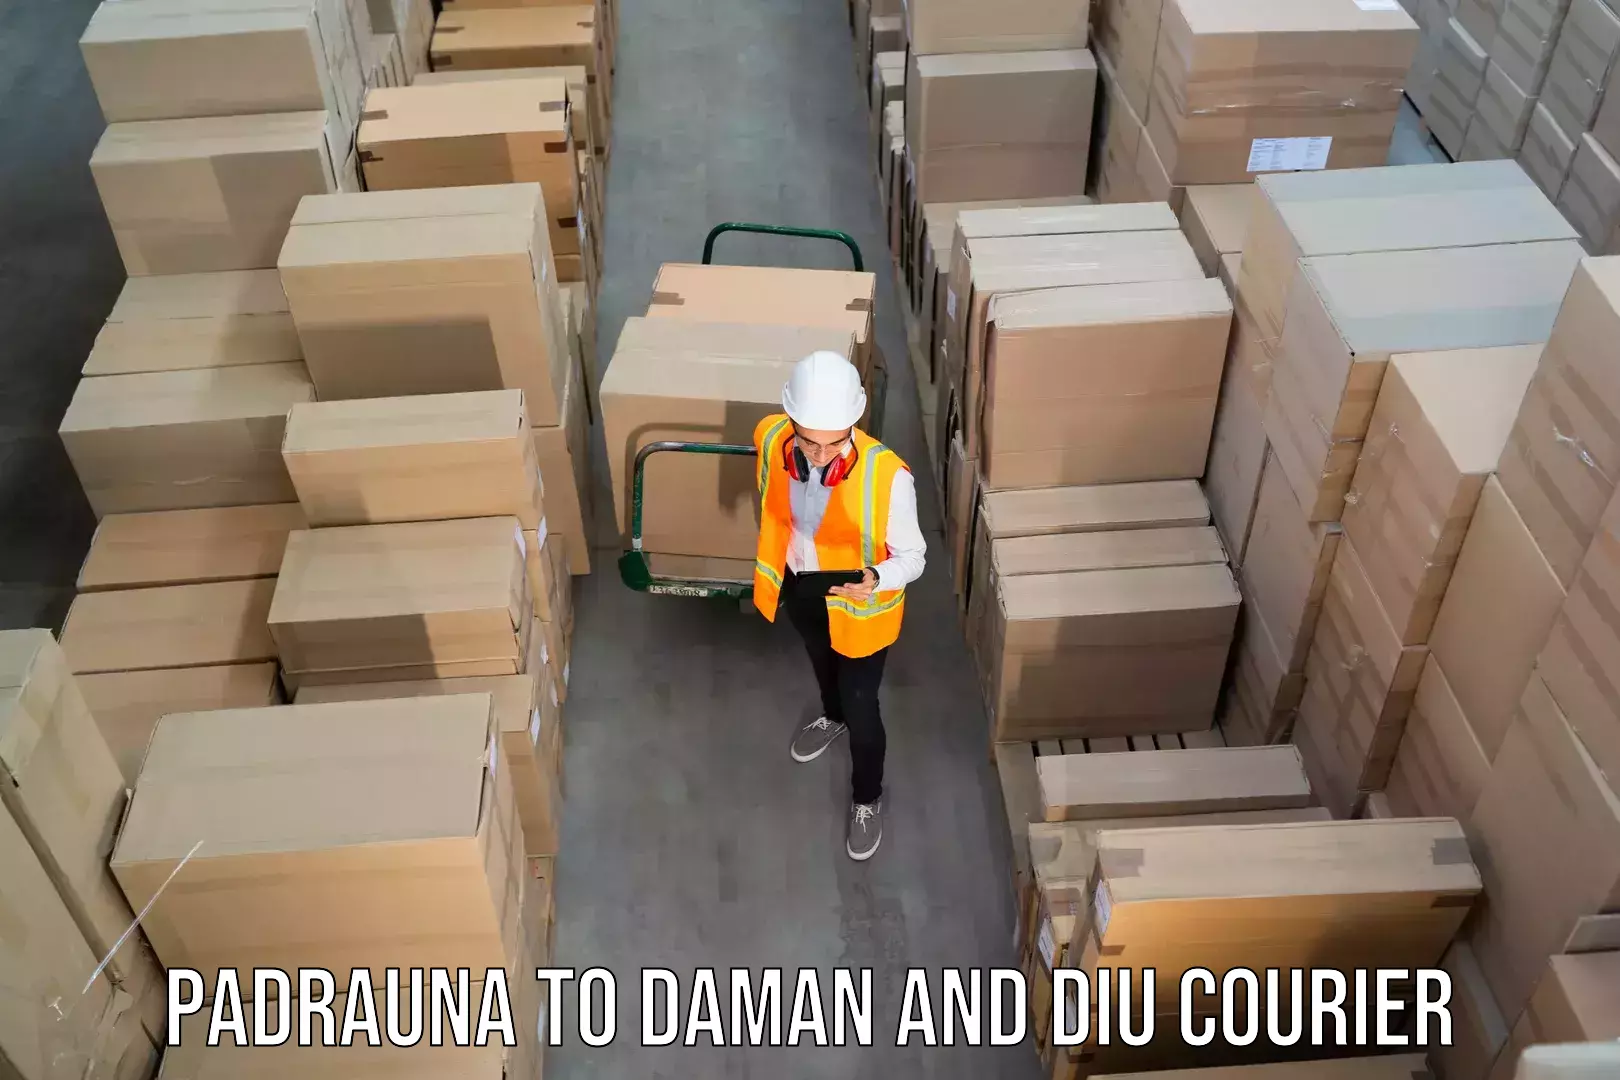 International courier networks Padrauna to Daman and Diu